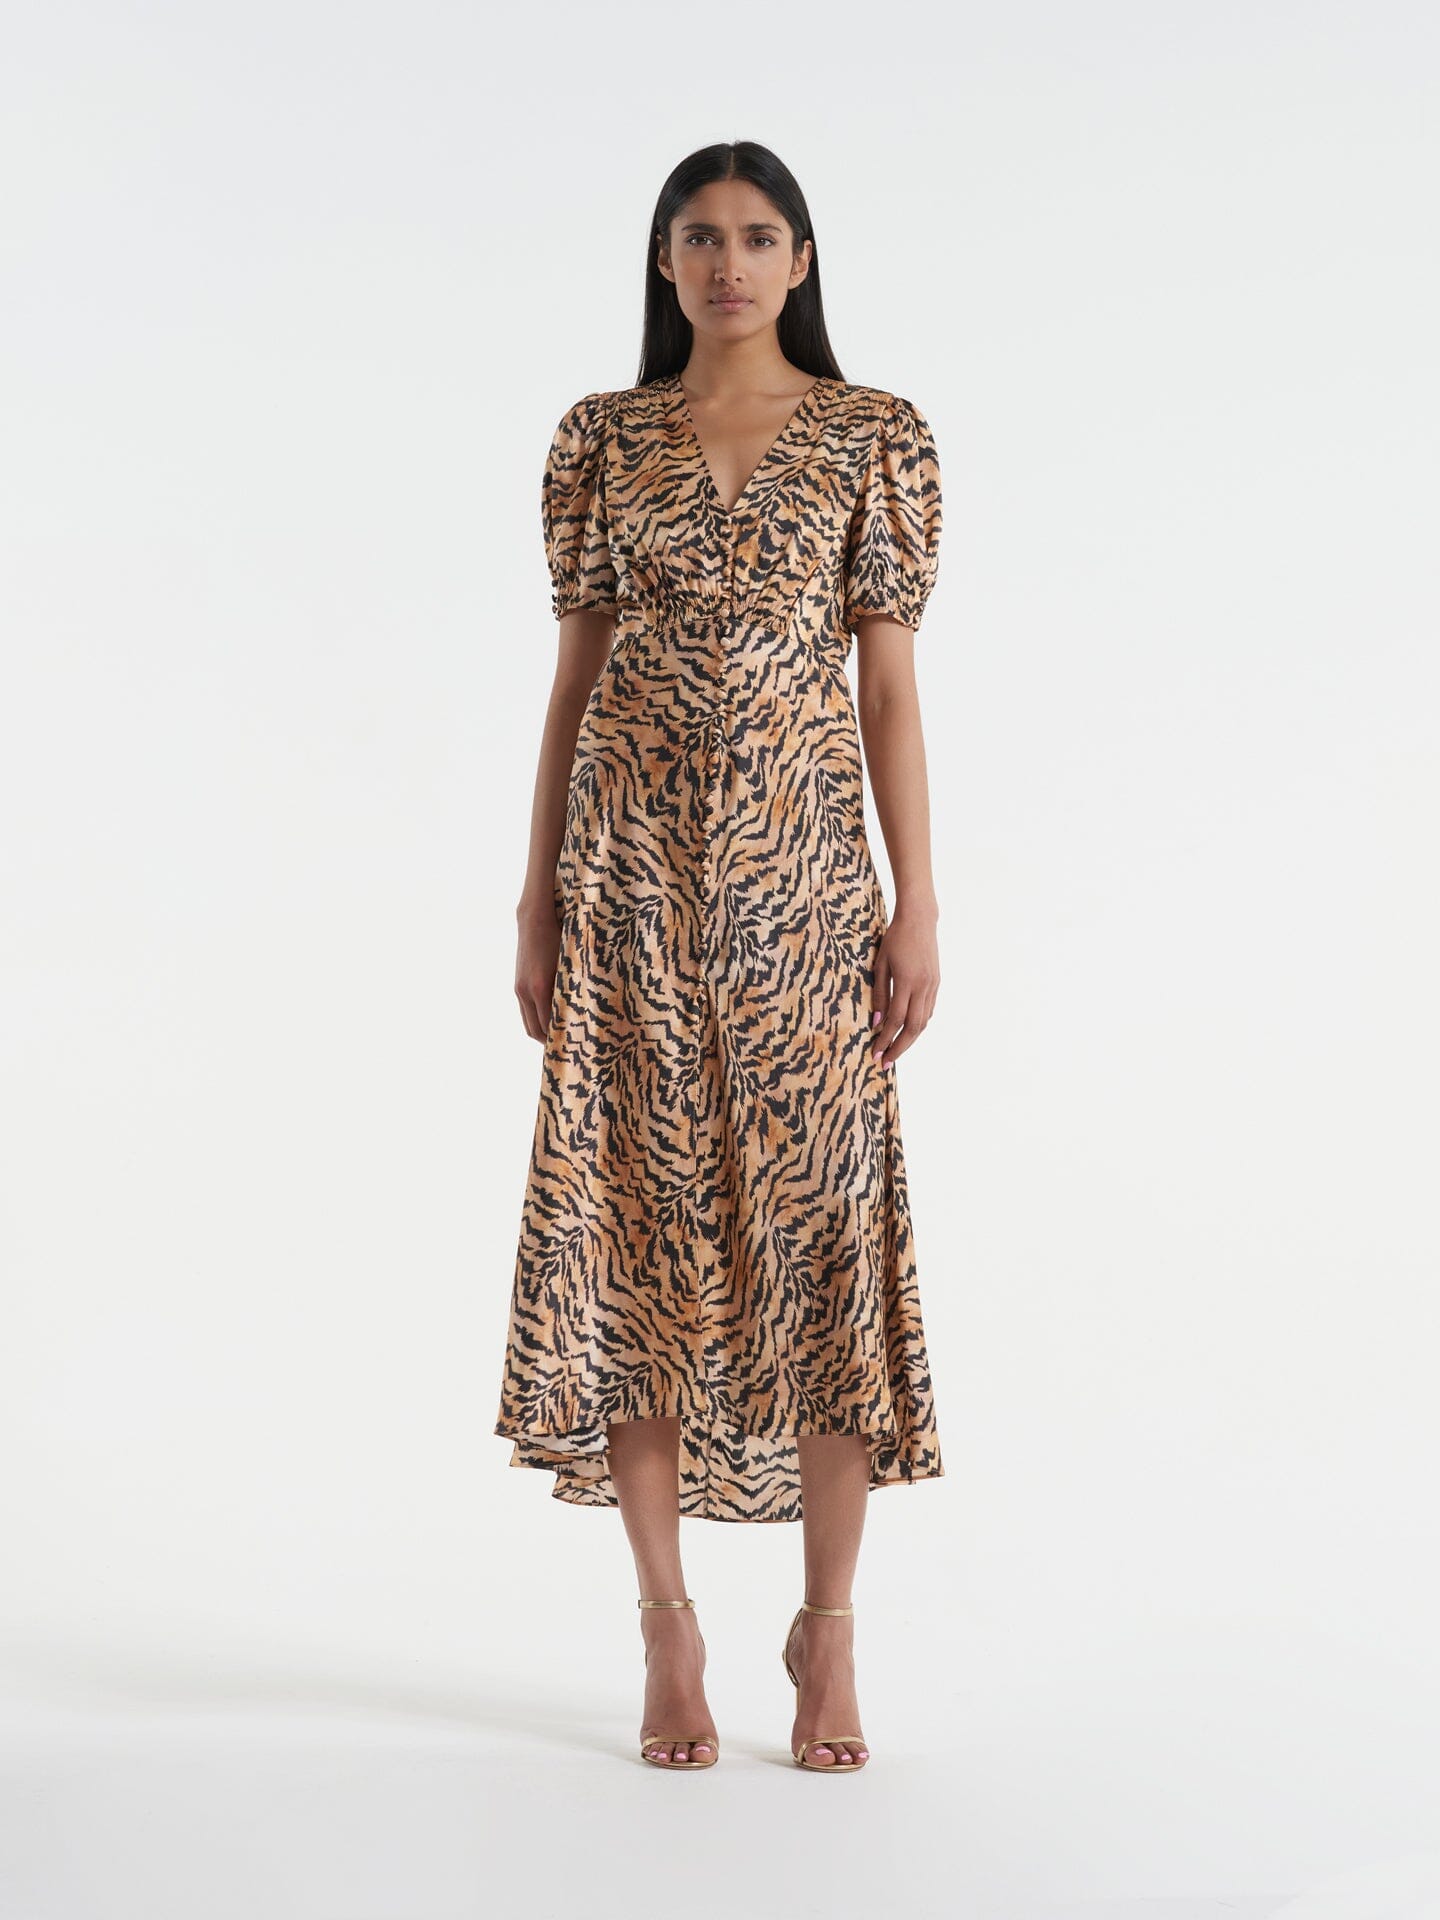 Lea Long Dress in Venyx Gold Tiger